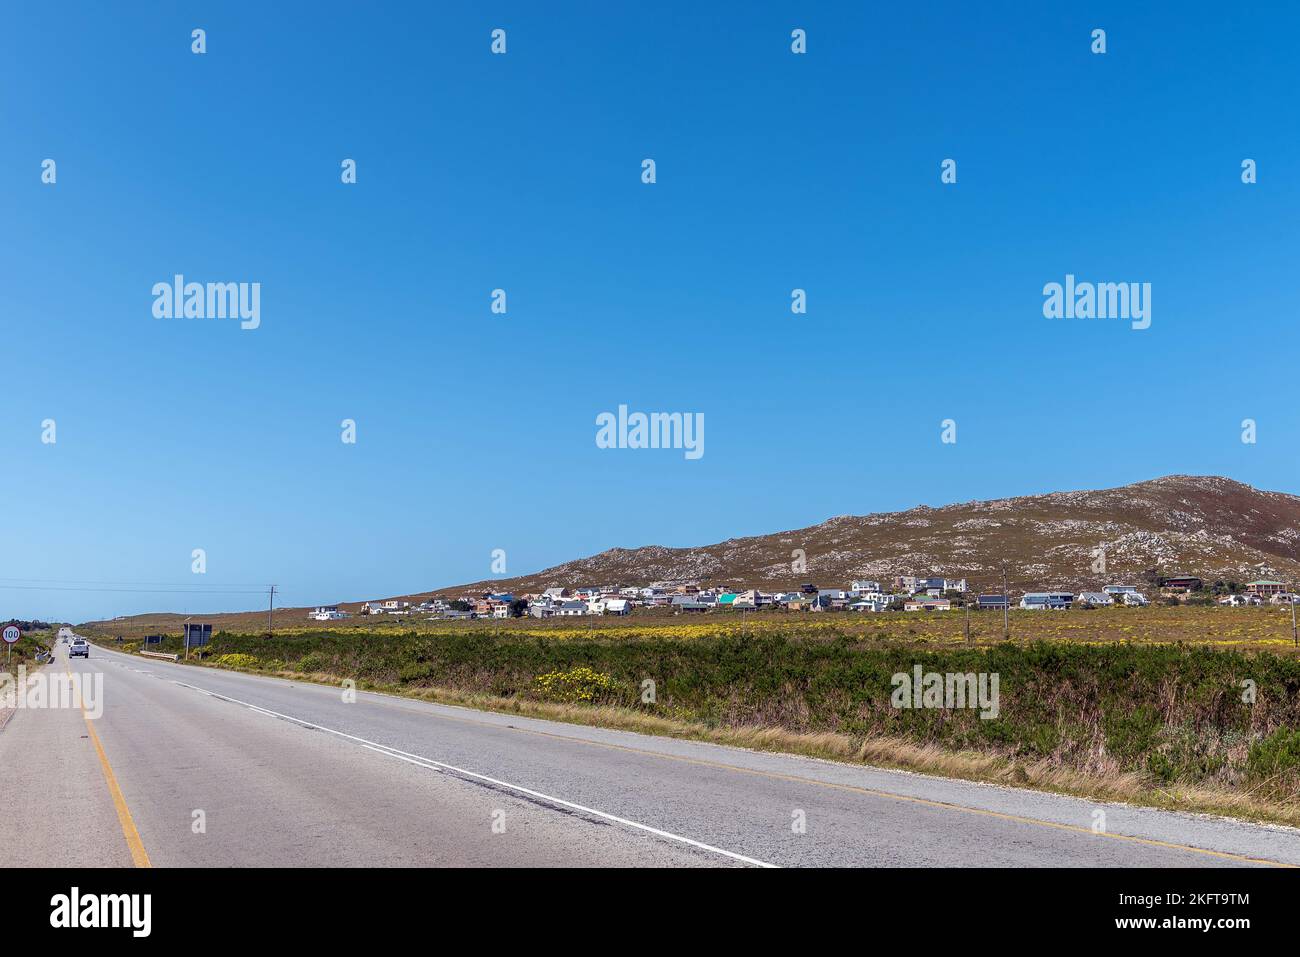 Pringlebaai, South Africa - Sep 20, 2022: Landscape on road R44. Pringlebaai on the Western Cape South Coast is visible Stock Photo